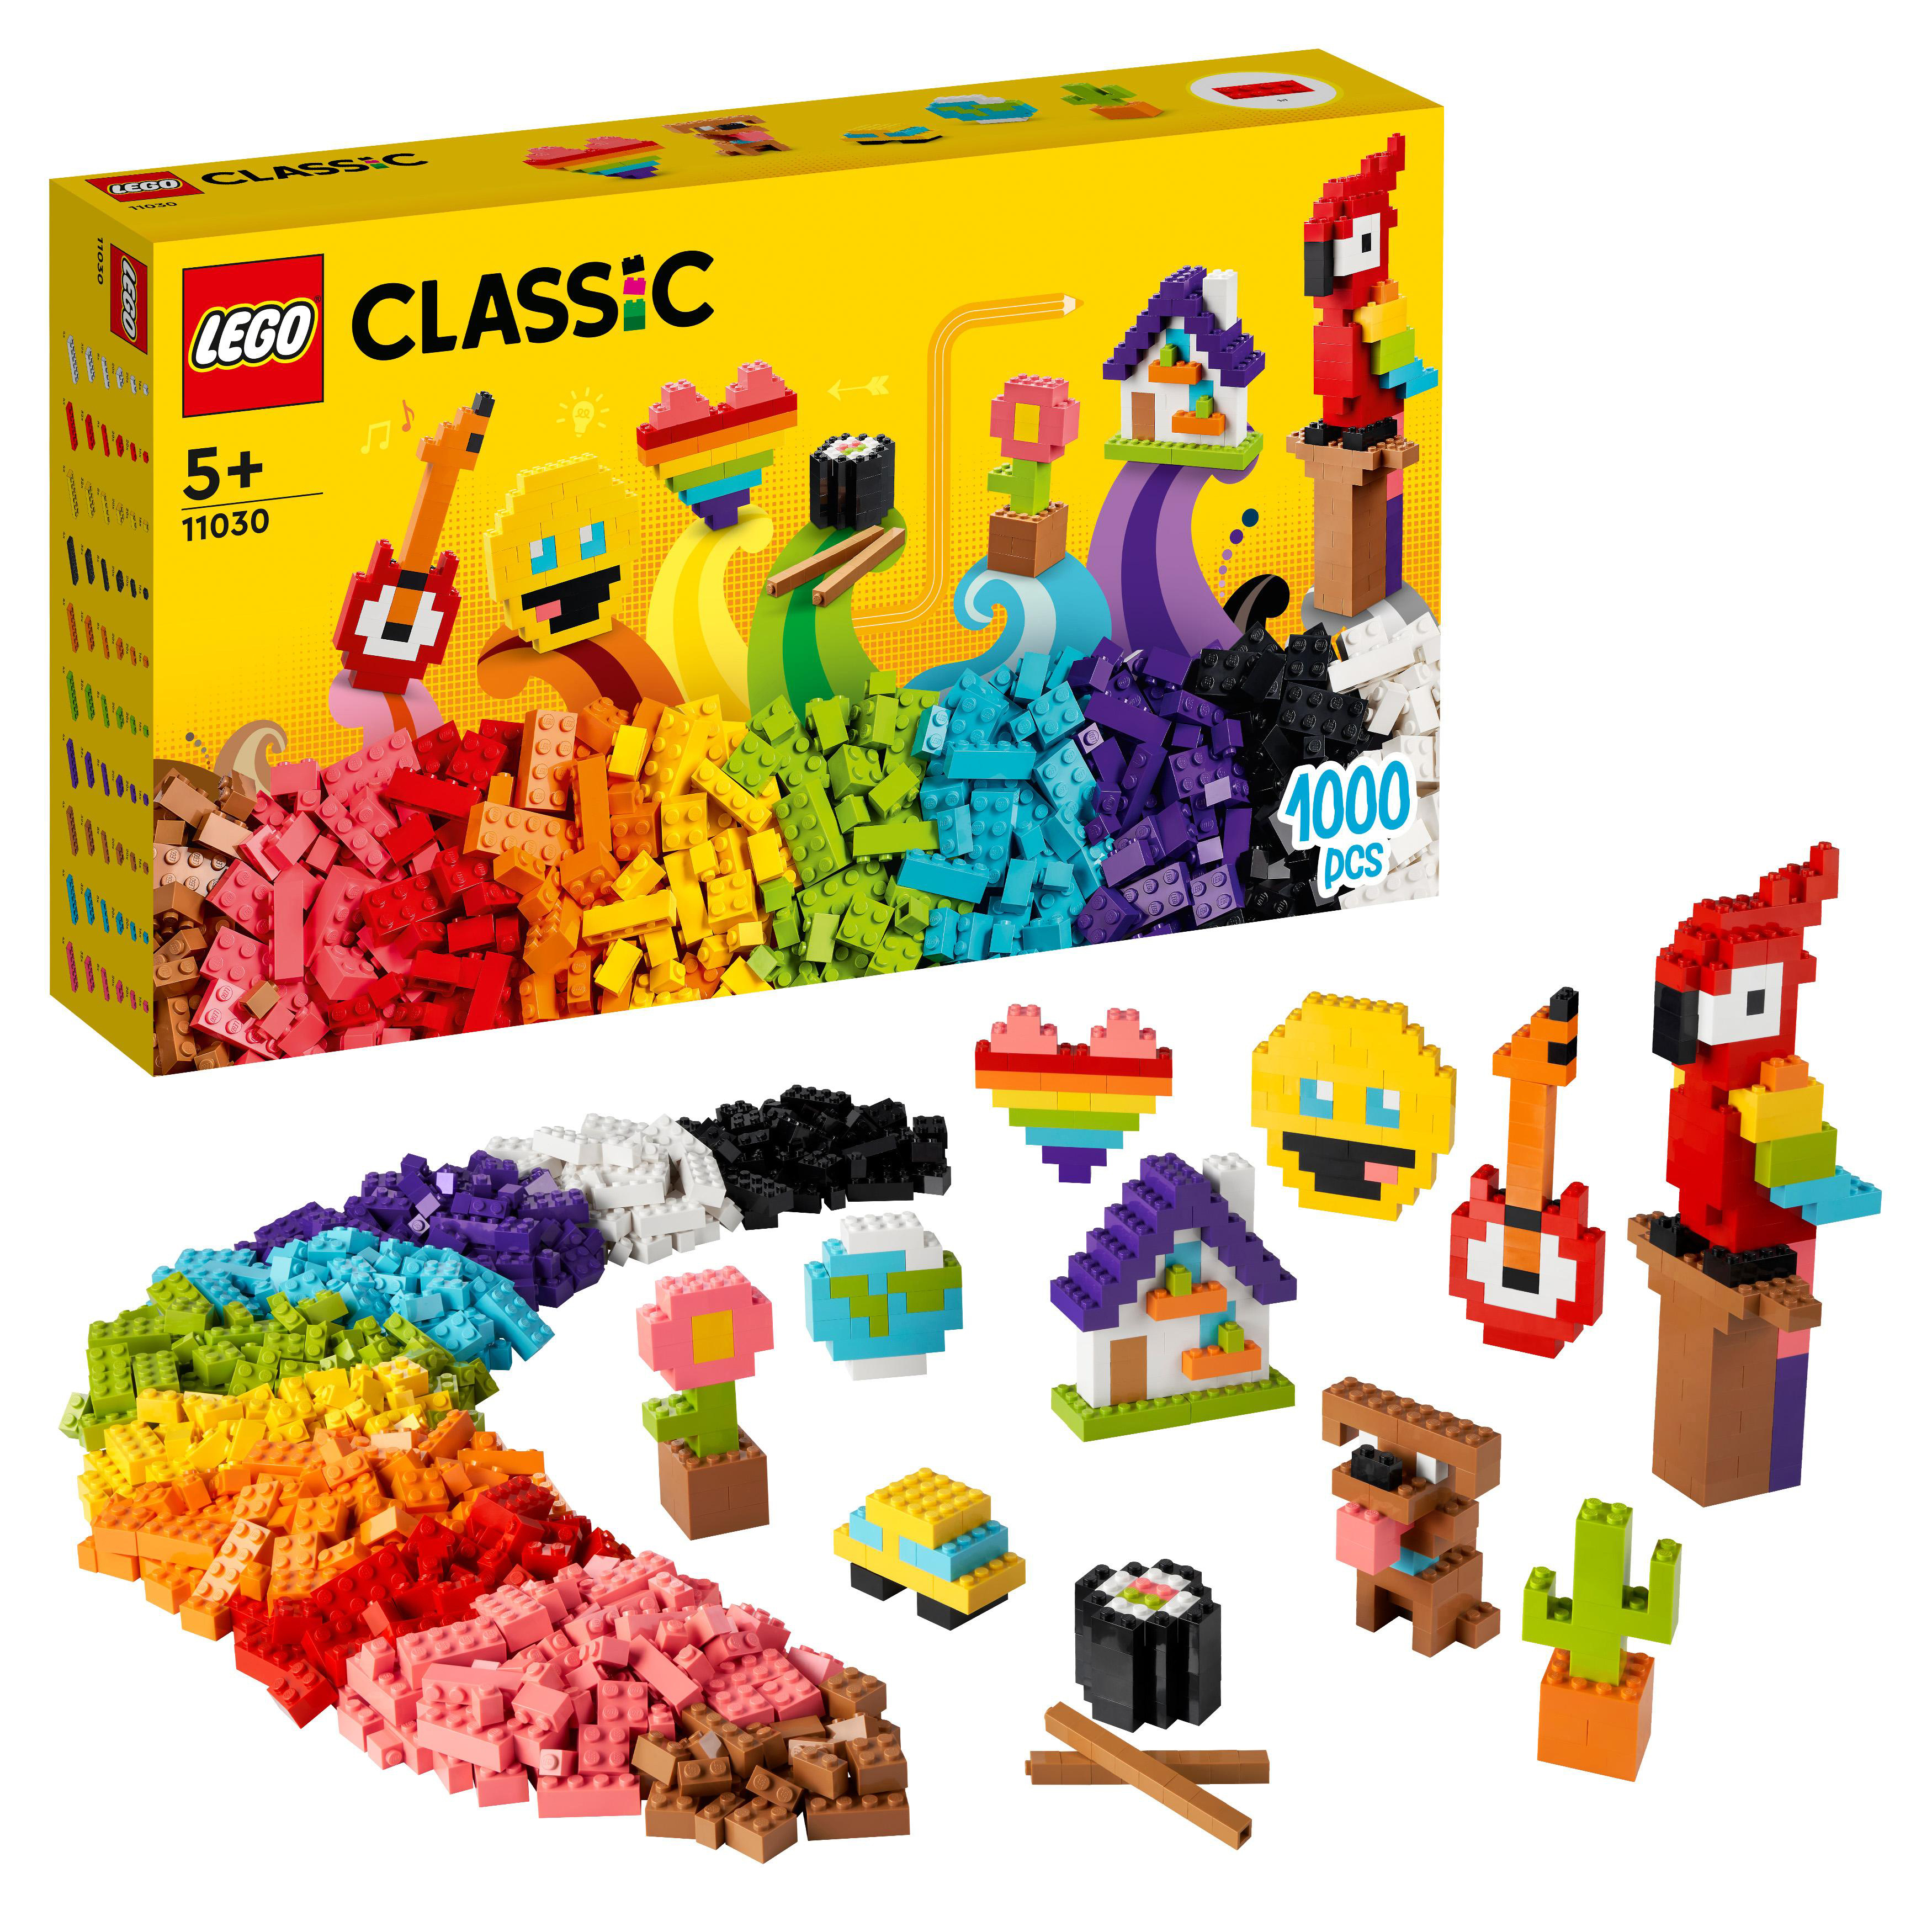 LEGO Classic 11030 Großes Bausatz, Mehrfarbig Kreativ-Bauset